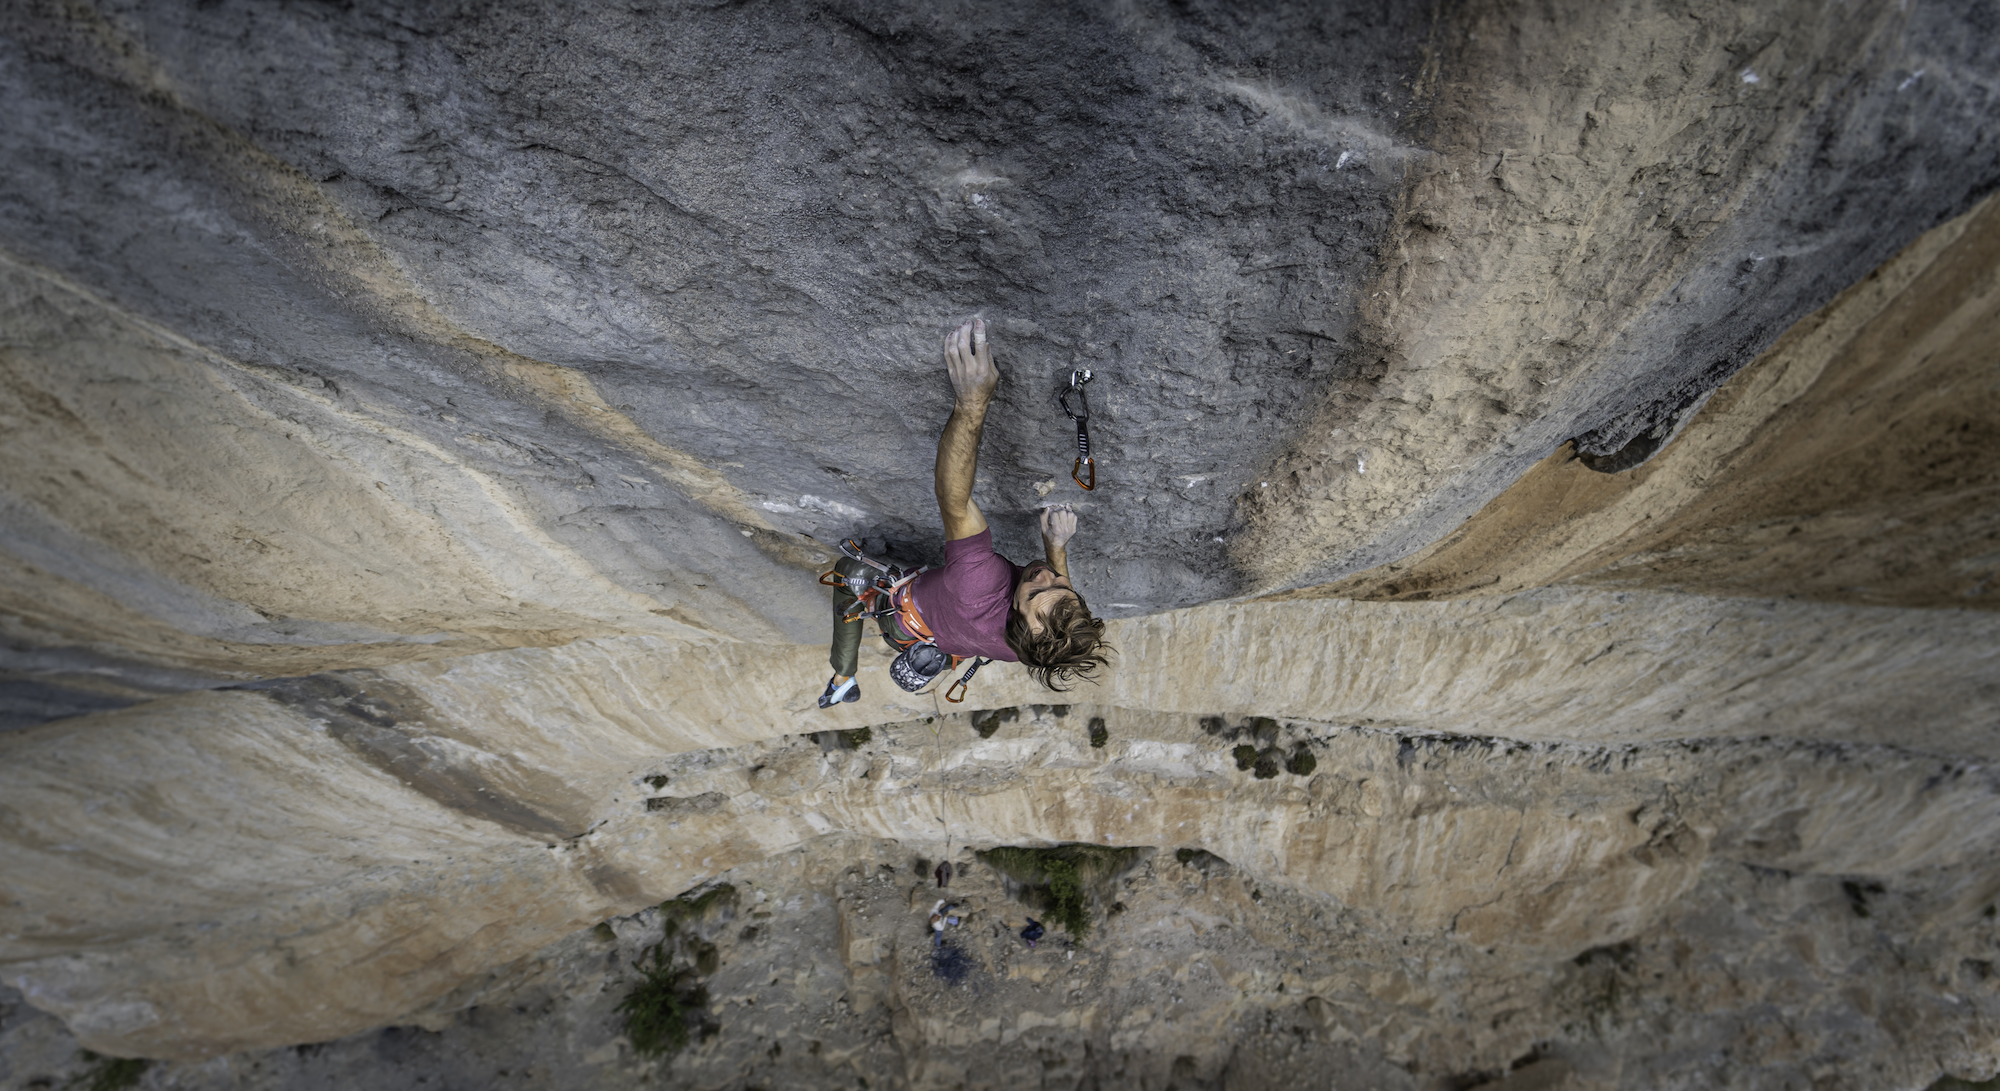 Chris Sharma climbing Sleeping Lion at the El Pati sector of Siurana.